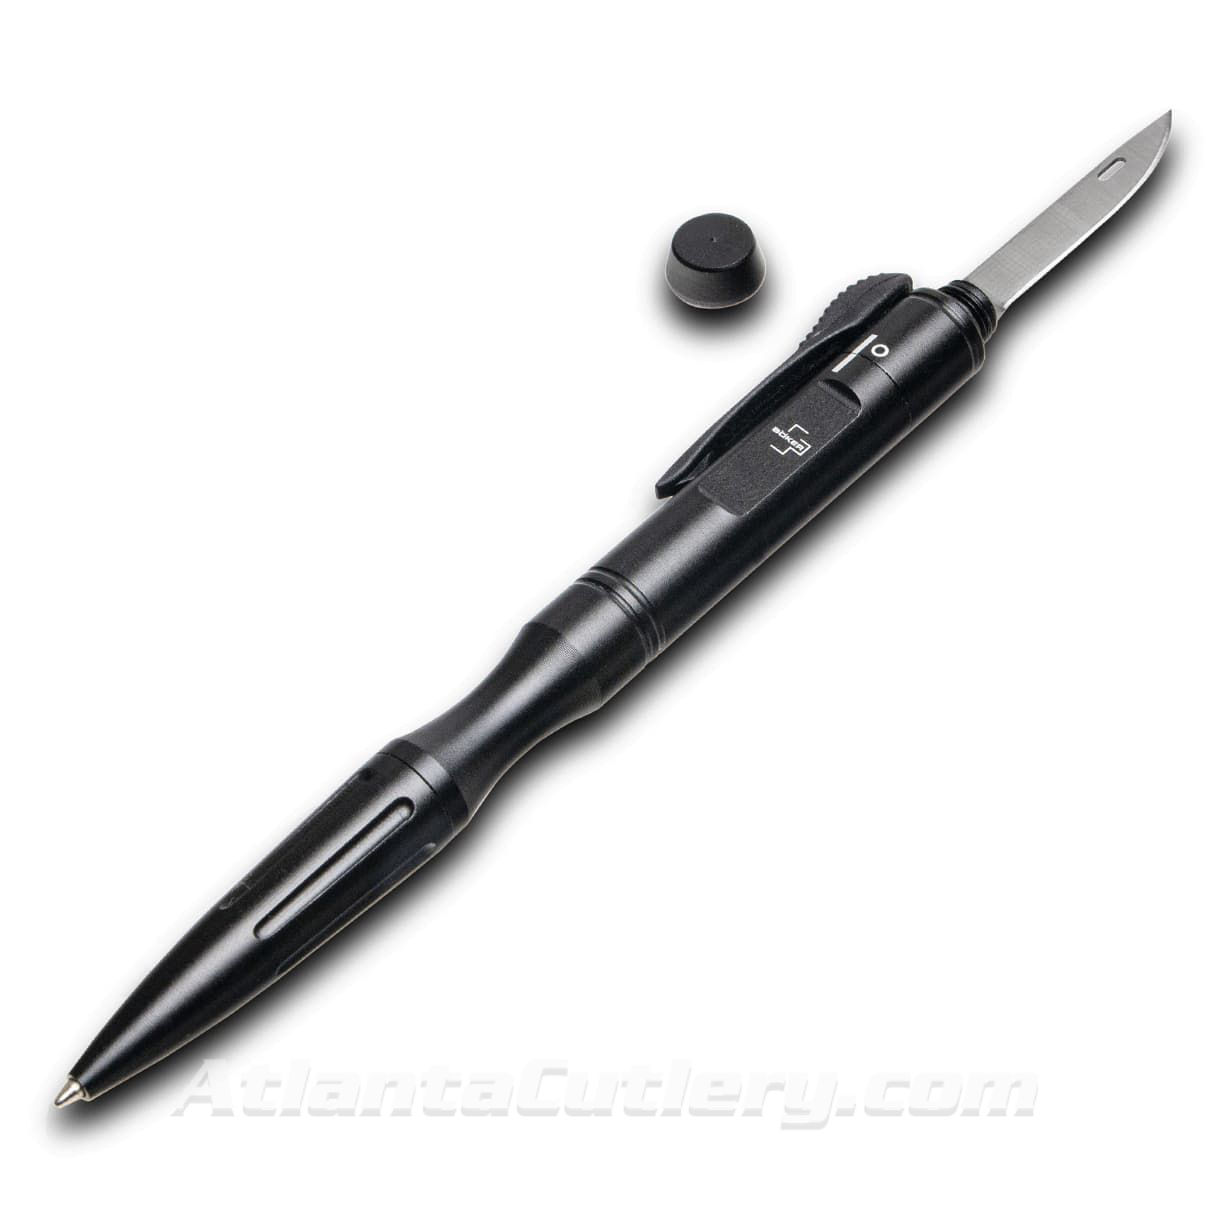 Boker Plus Pen Knife with Full Auto Blade, OTF lock, refillable inkpen, d2 steel blade, aluminum body